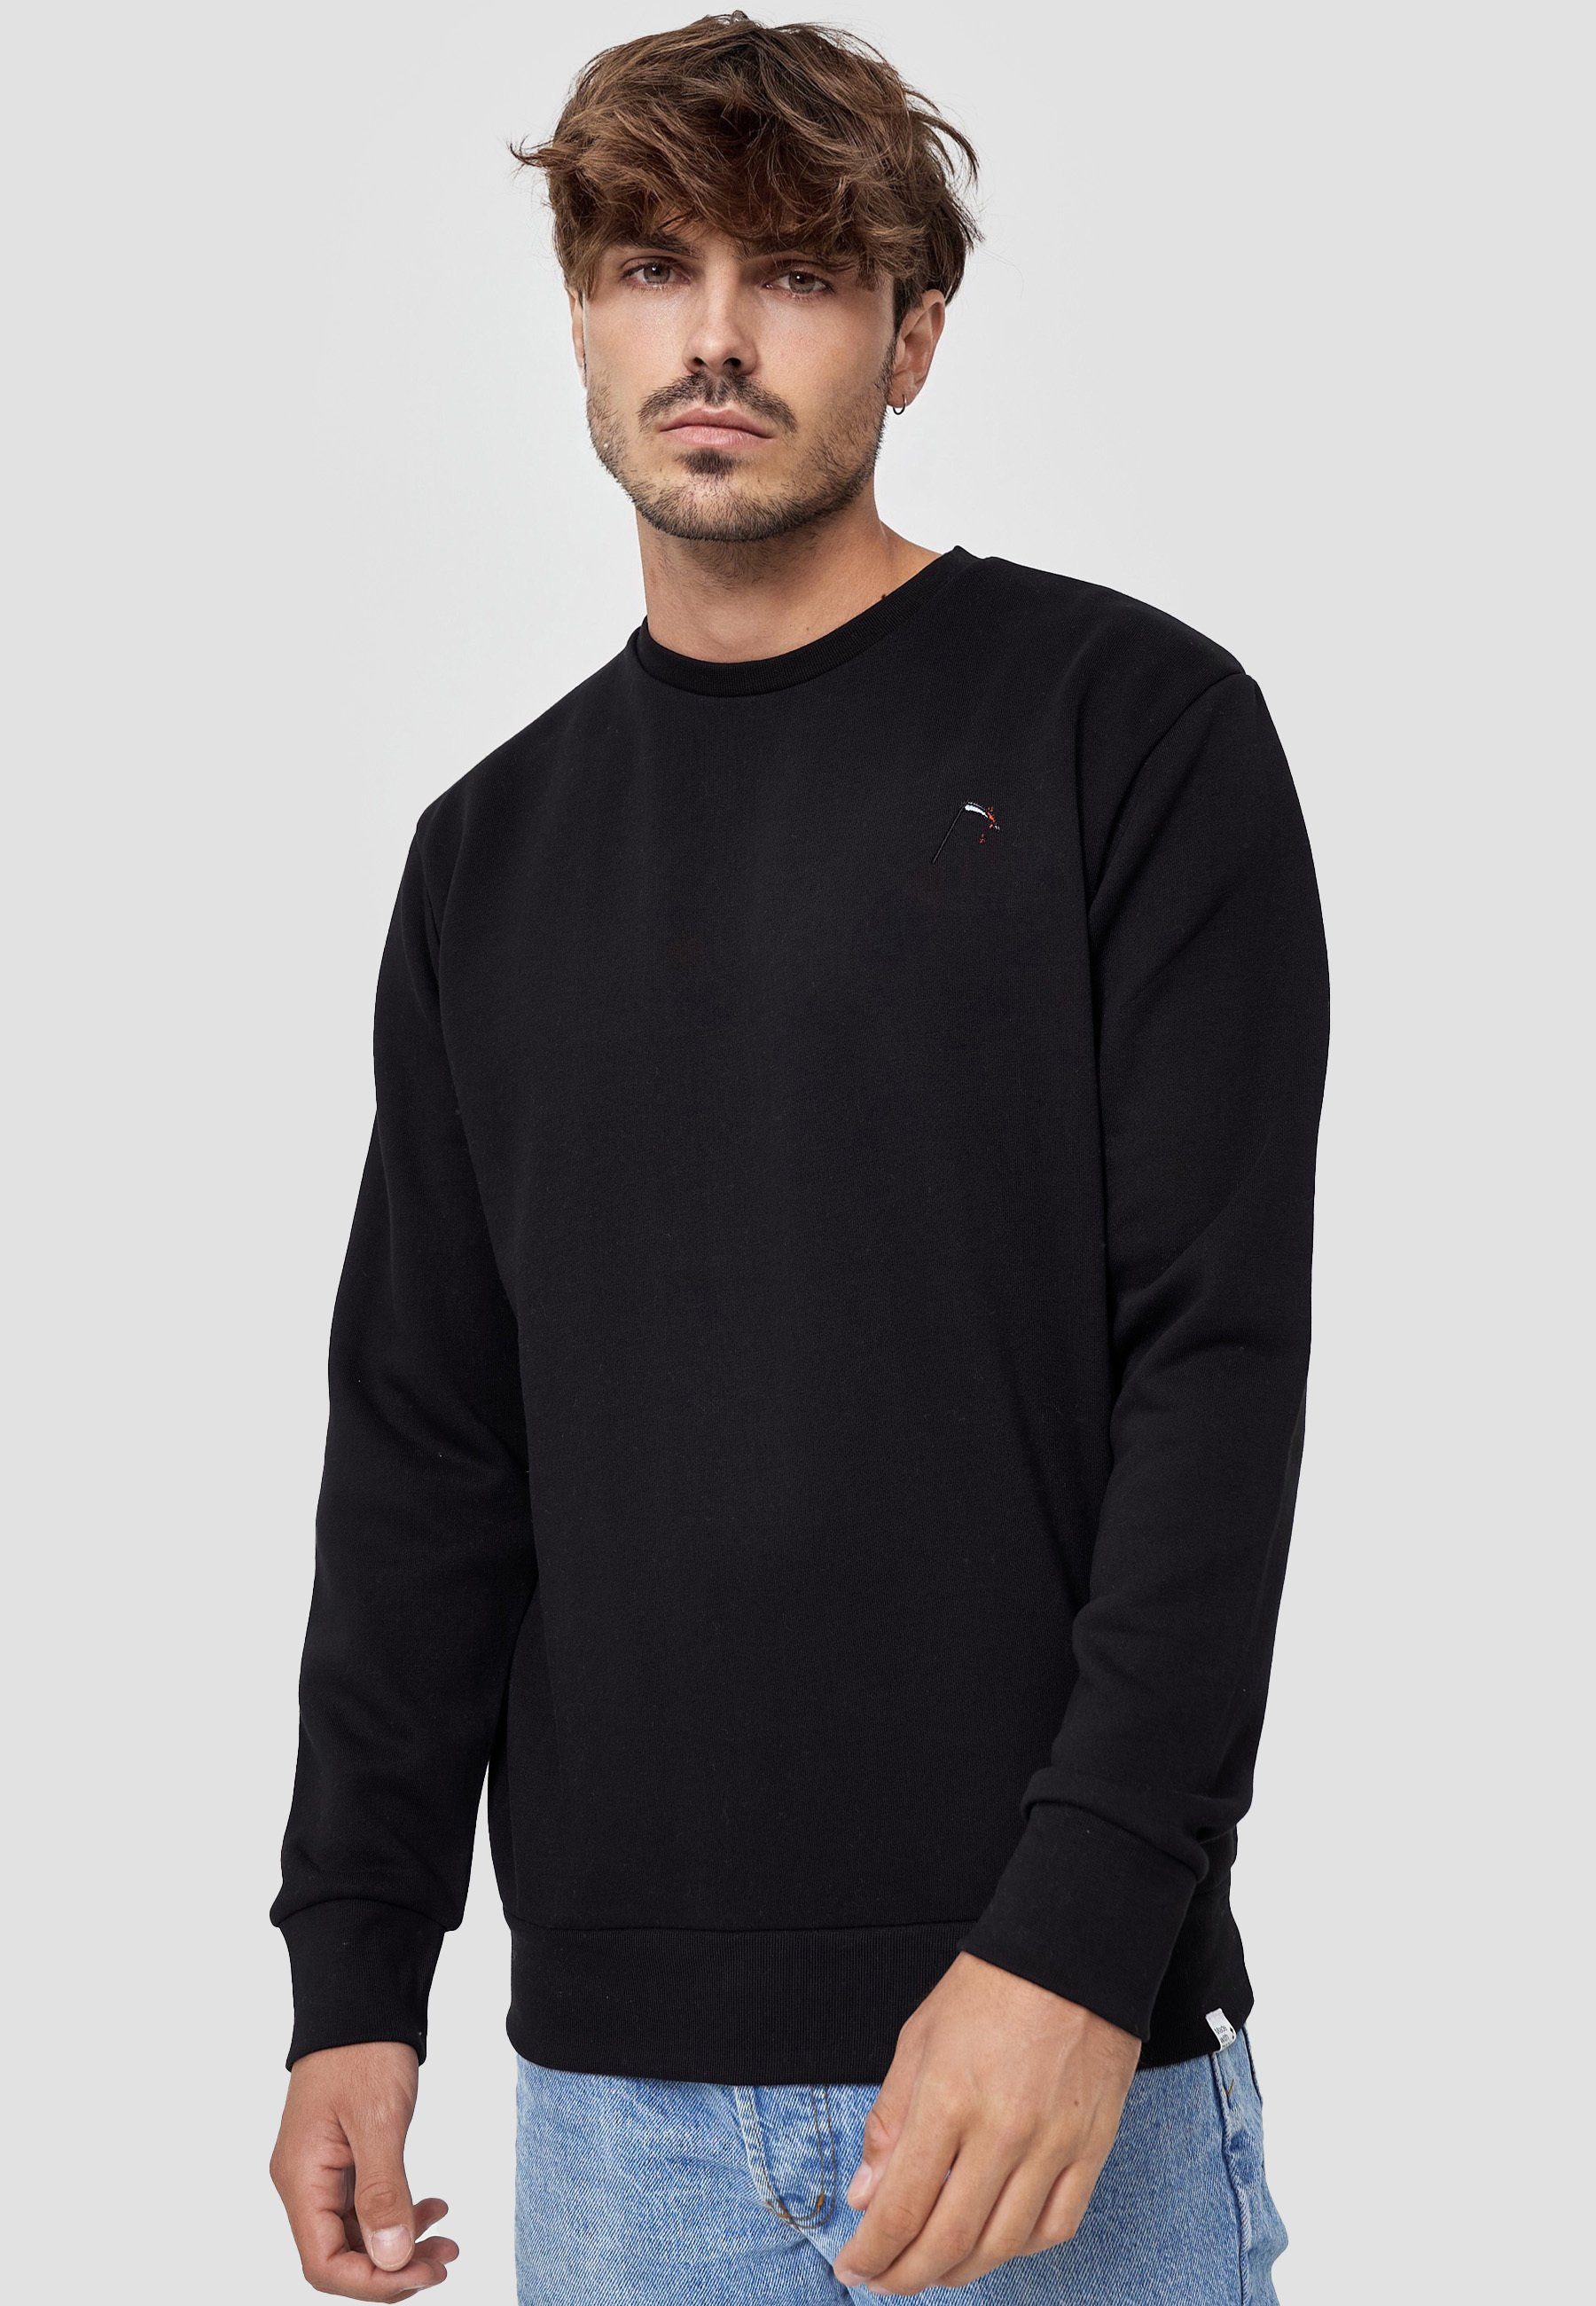 MIKON Sweatshirt Sense GOTS zertifizierte Bio-Baumwolle schwarz-black